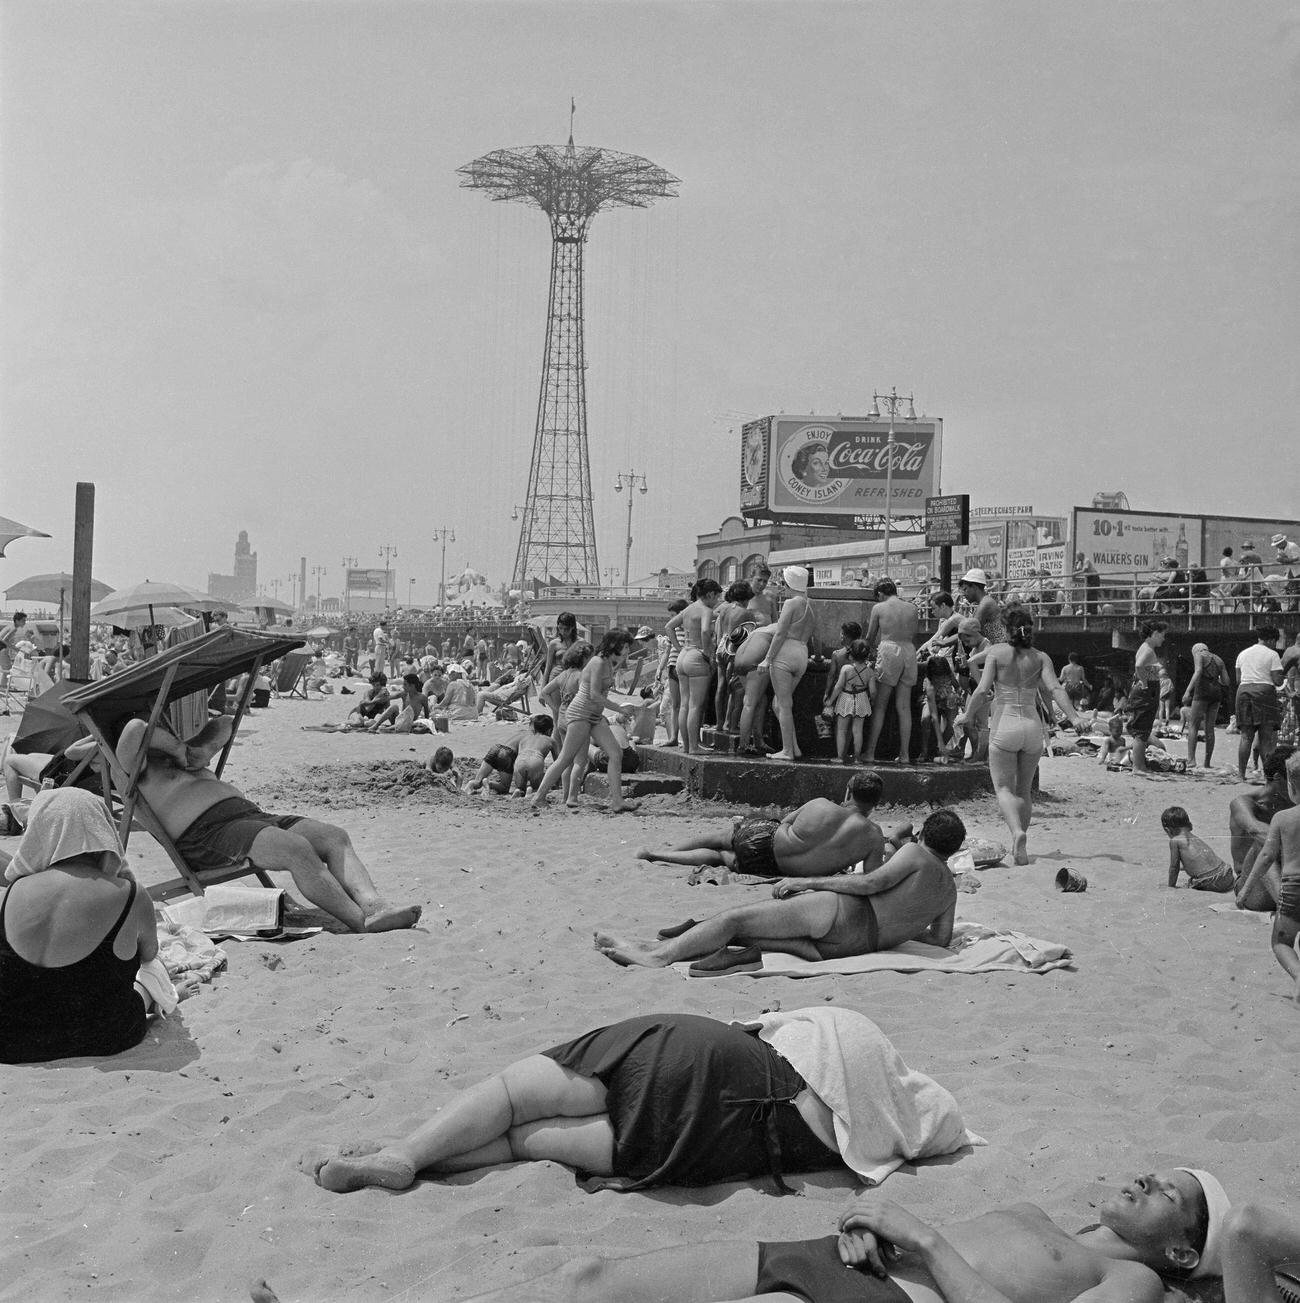 More Sunbathers On Coney Island Beach